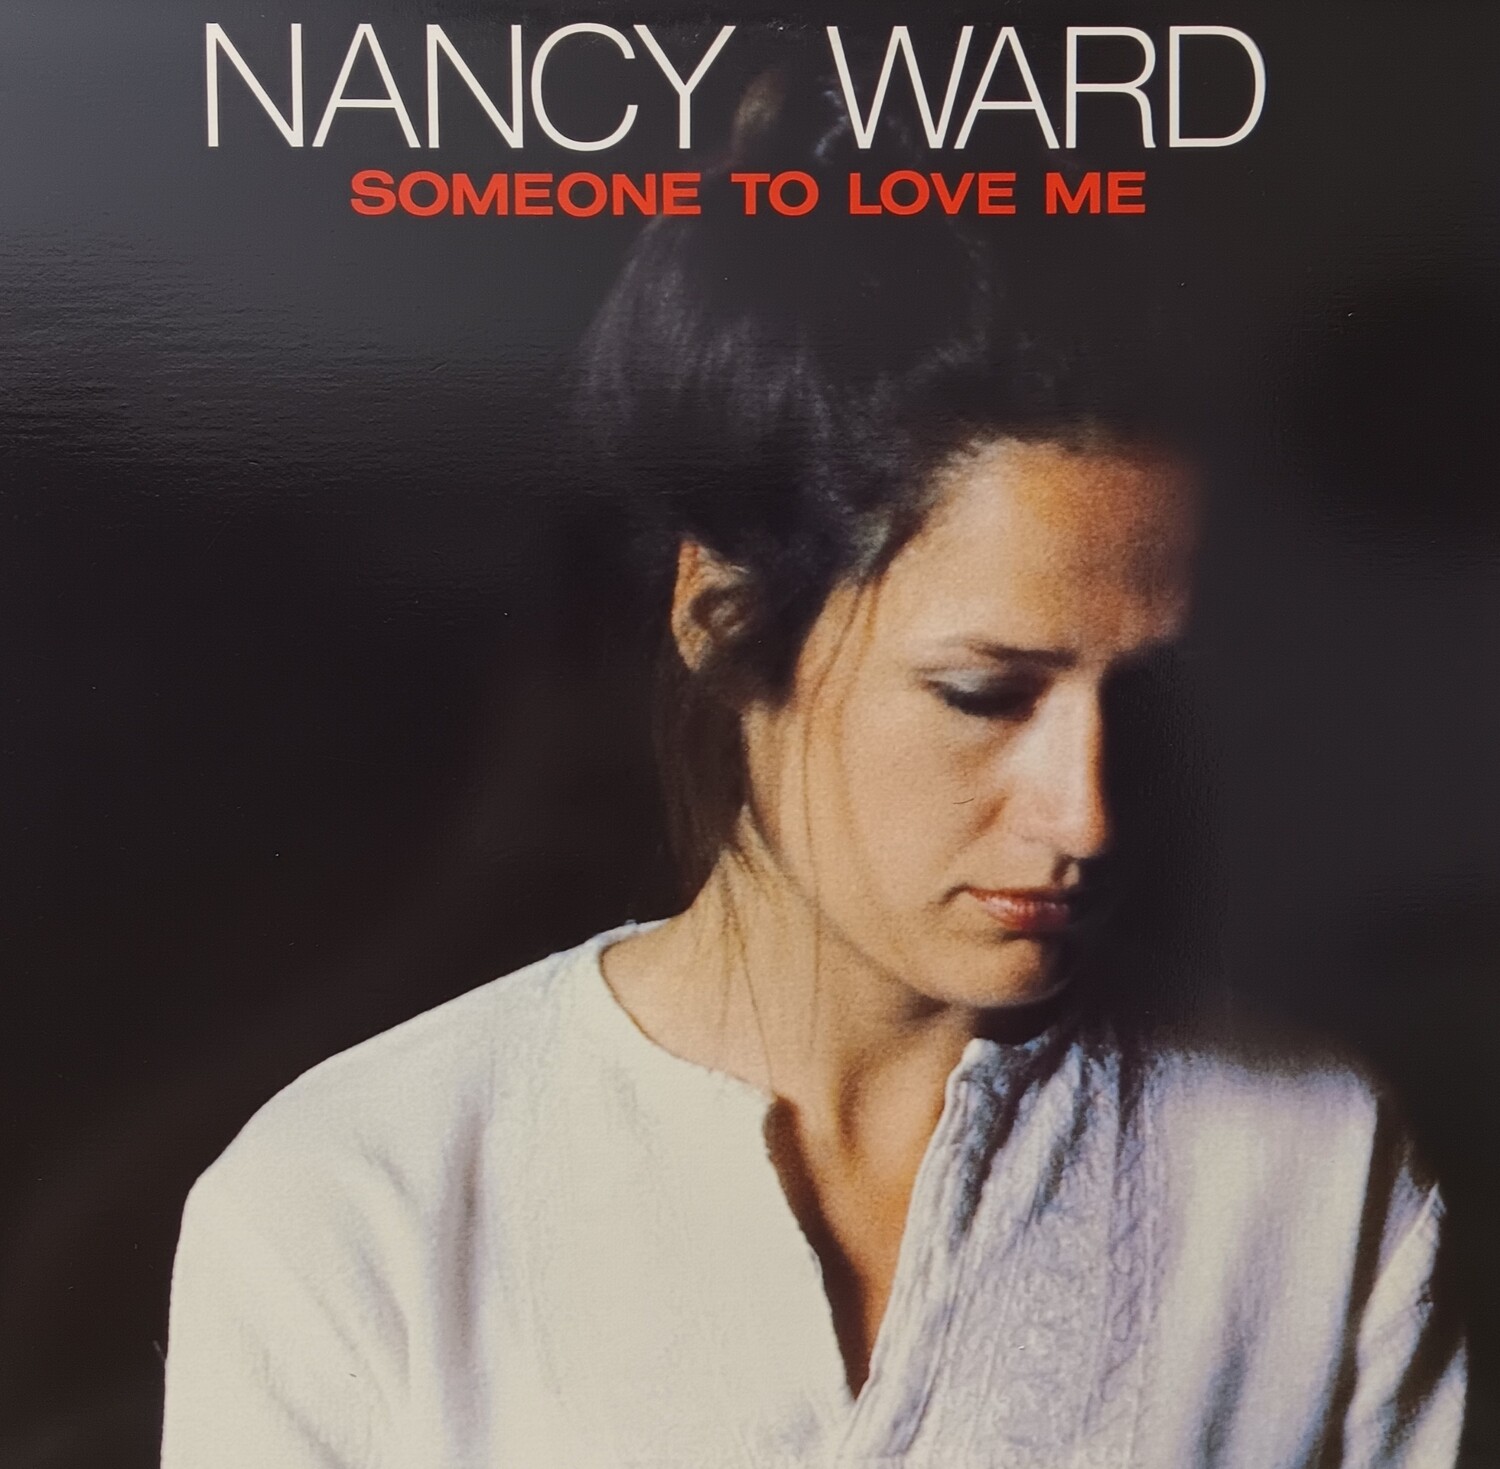 NANCY WARD - Someone to love me